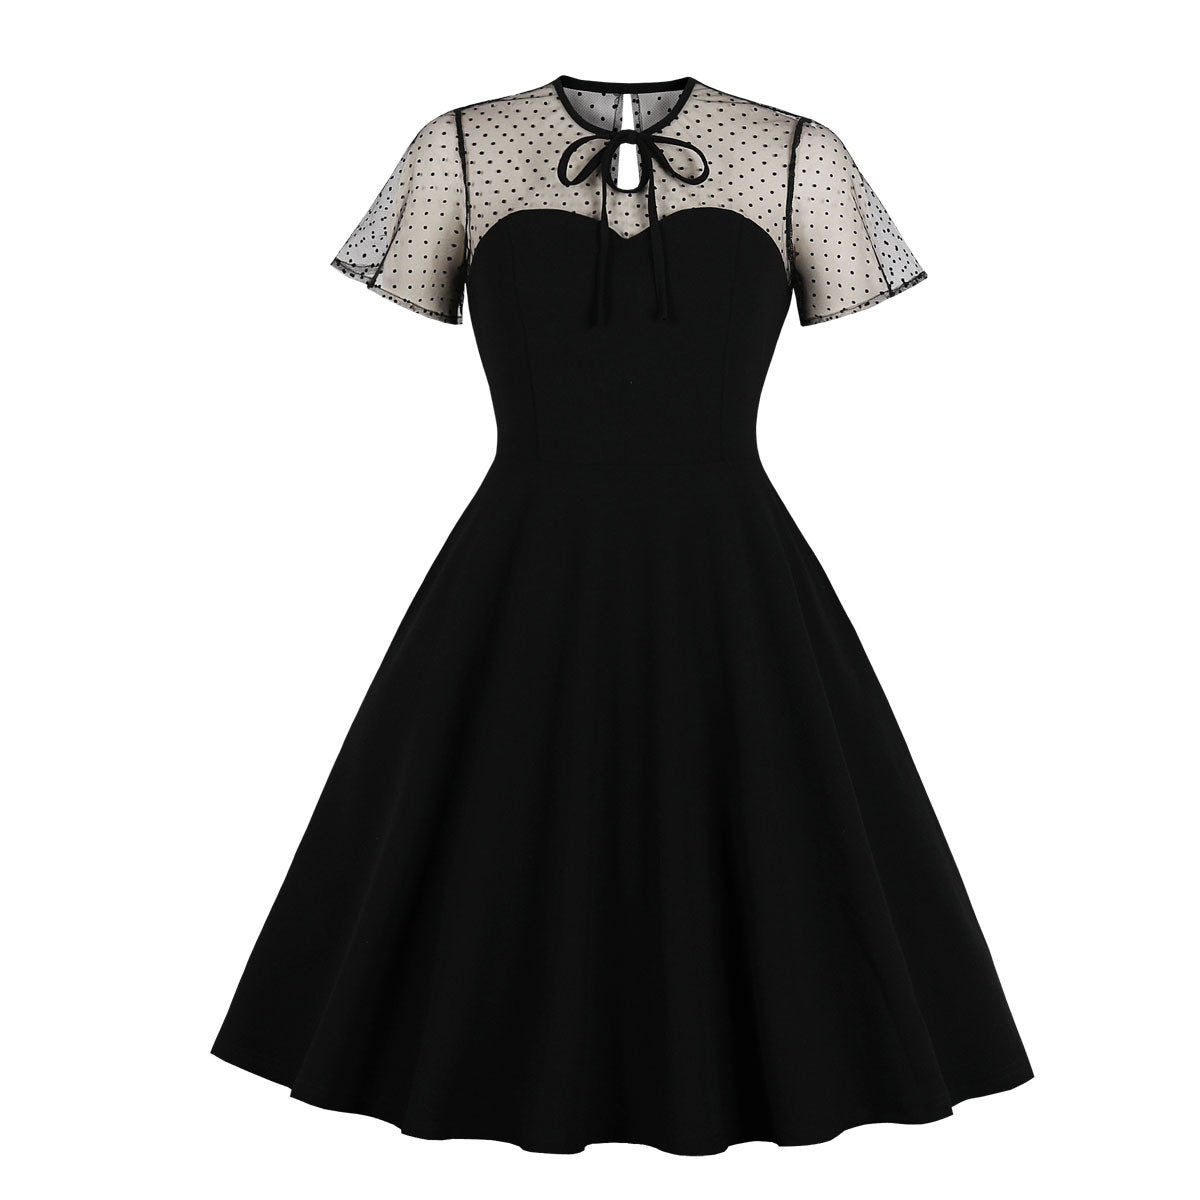 Retro Women Short Sleeves Net Dot Ball Sleeves-Vintage Dresses-Black-S-Free Shipping at meselling99